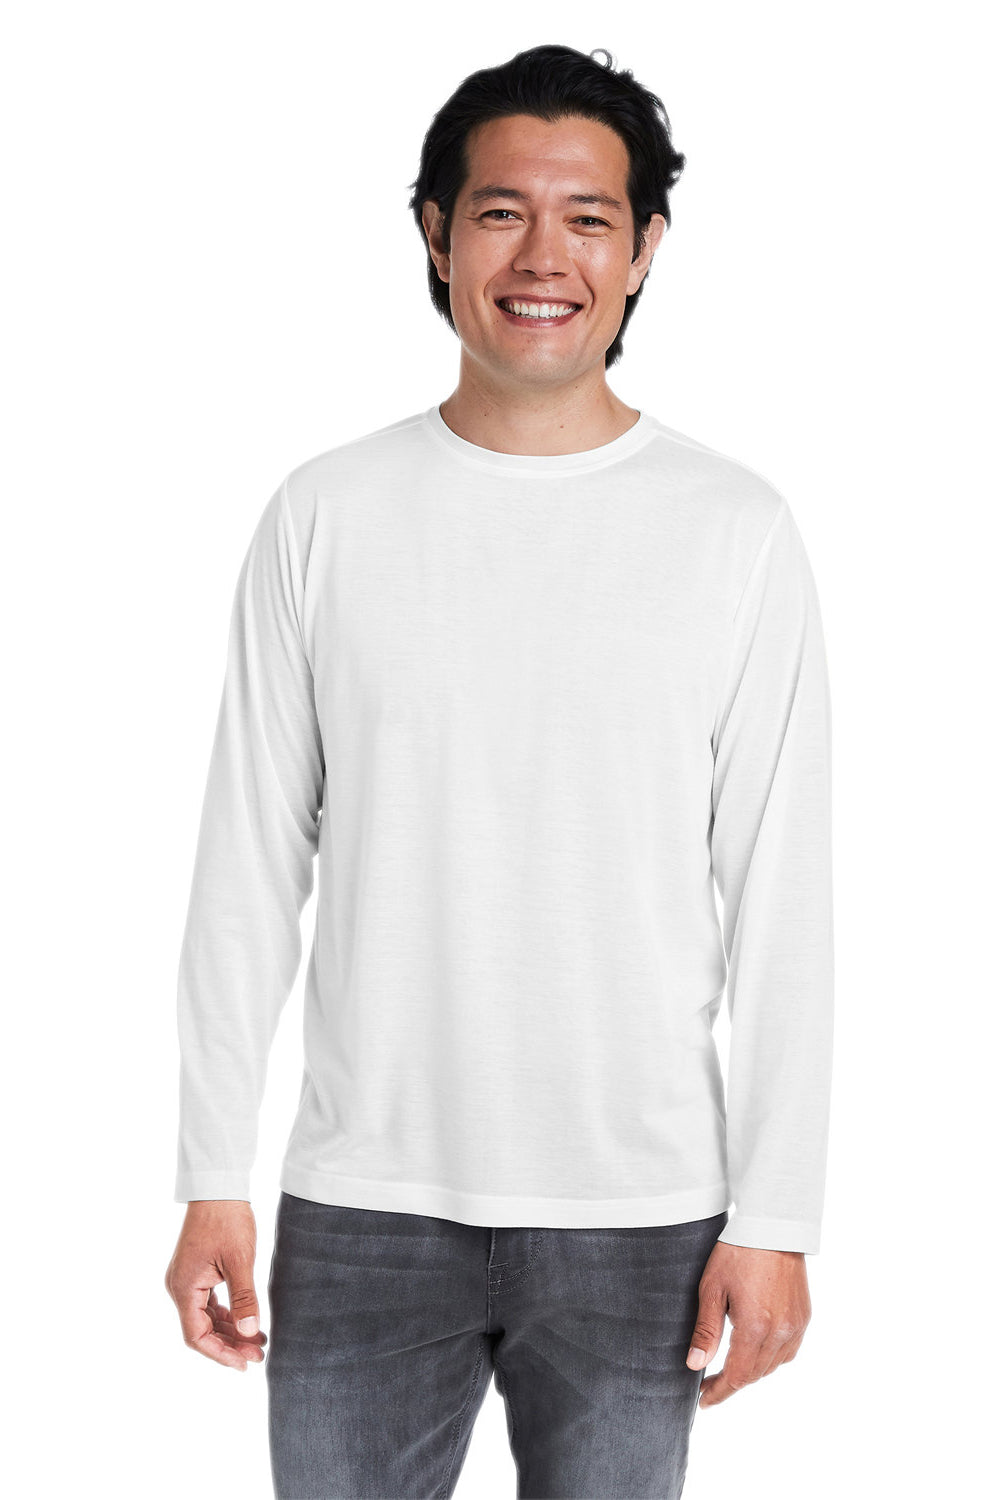 Core 365 CE111L Mens Fusion ChromaSoft Performance Moisture Wicking Long Sleeve Crewneck T-Shirt White Front